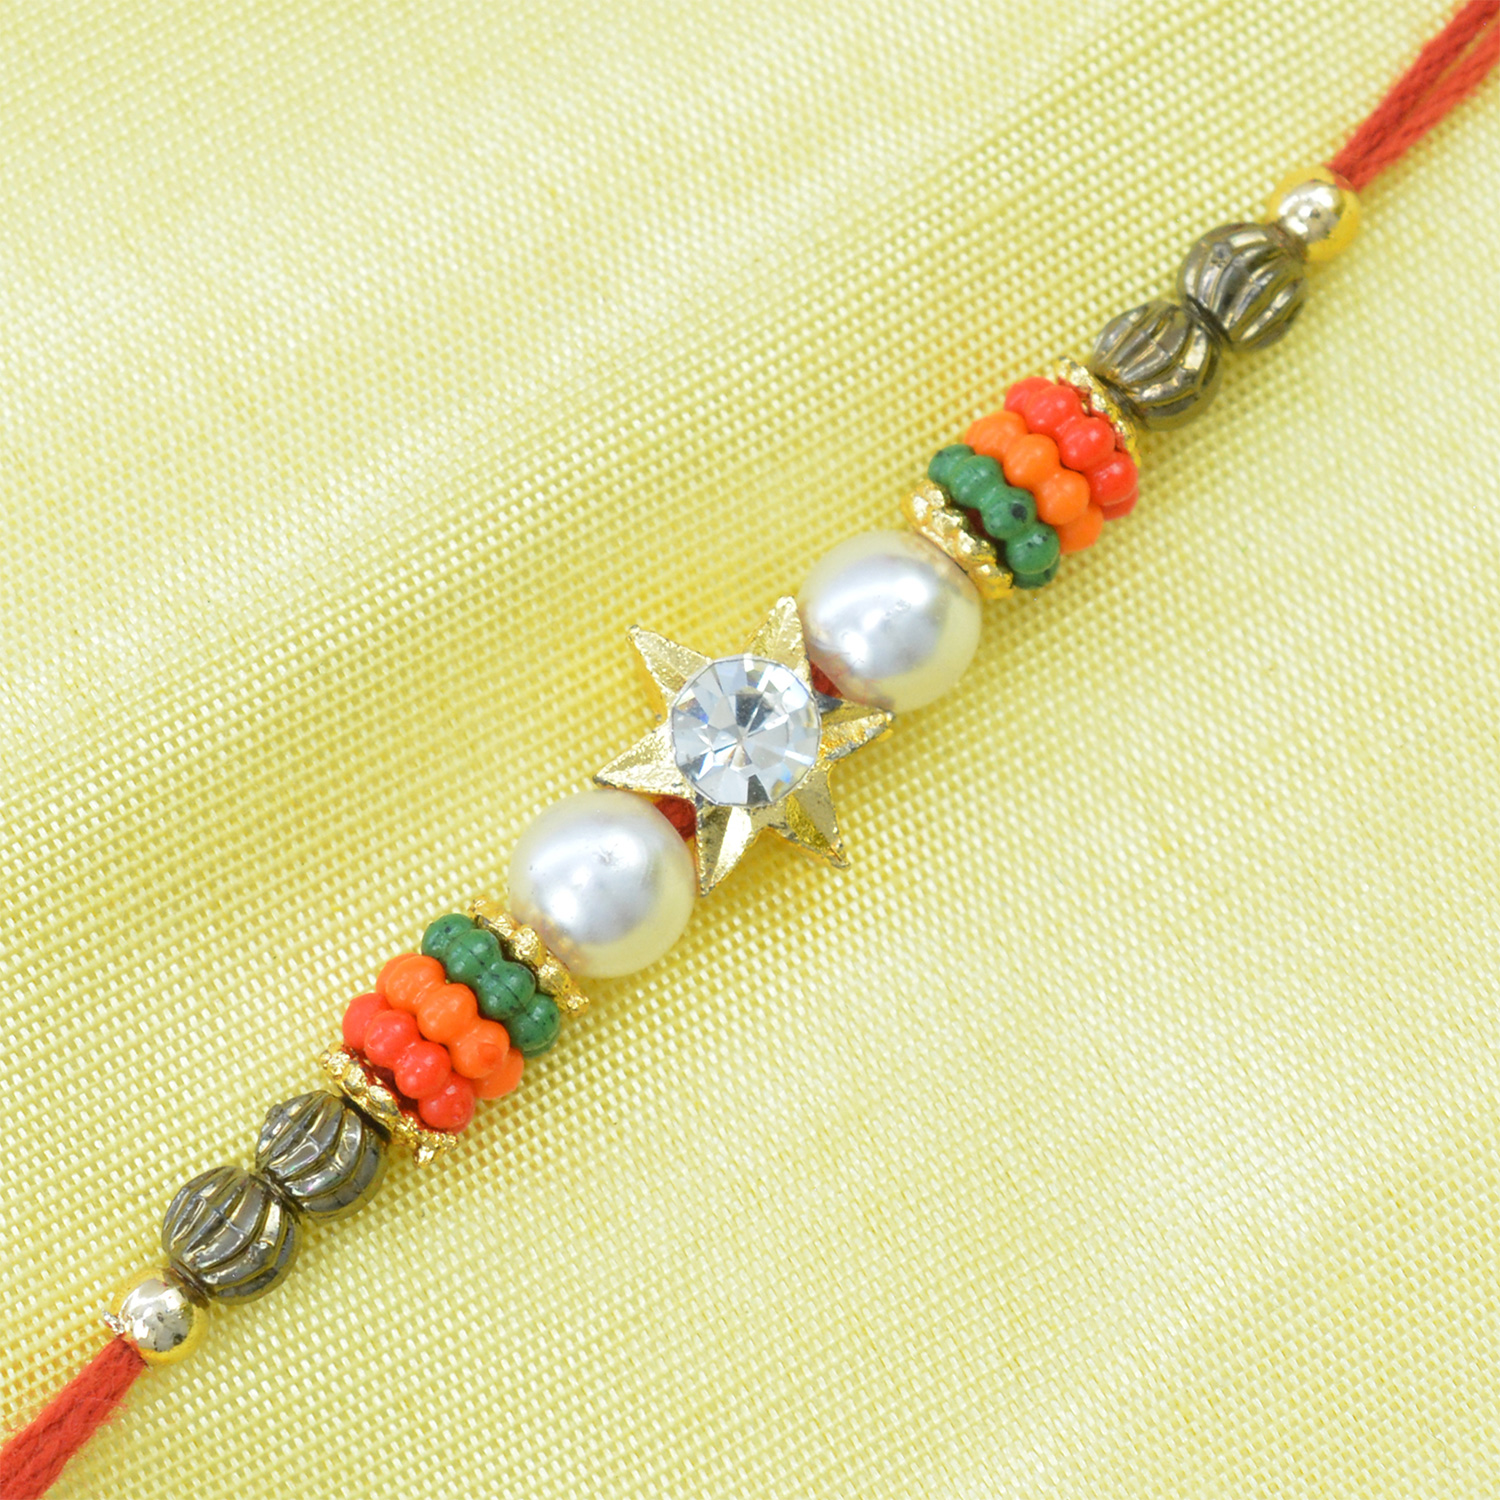 Diamond on Star in the Middle Thread Beads Rakhi